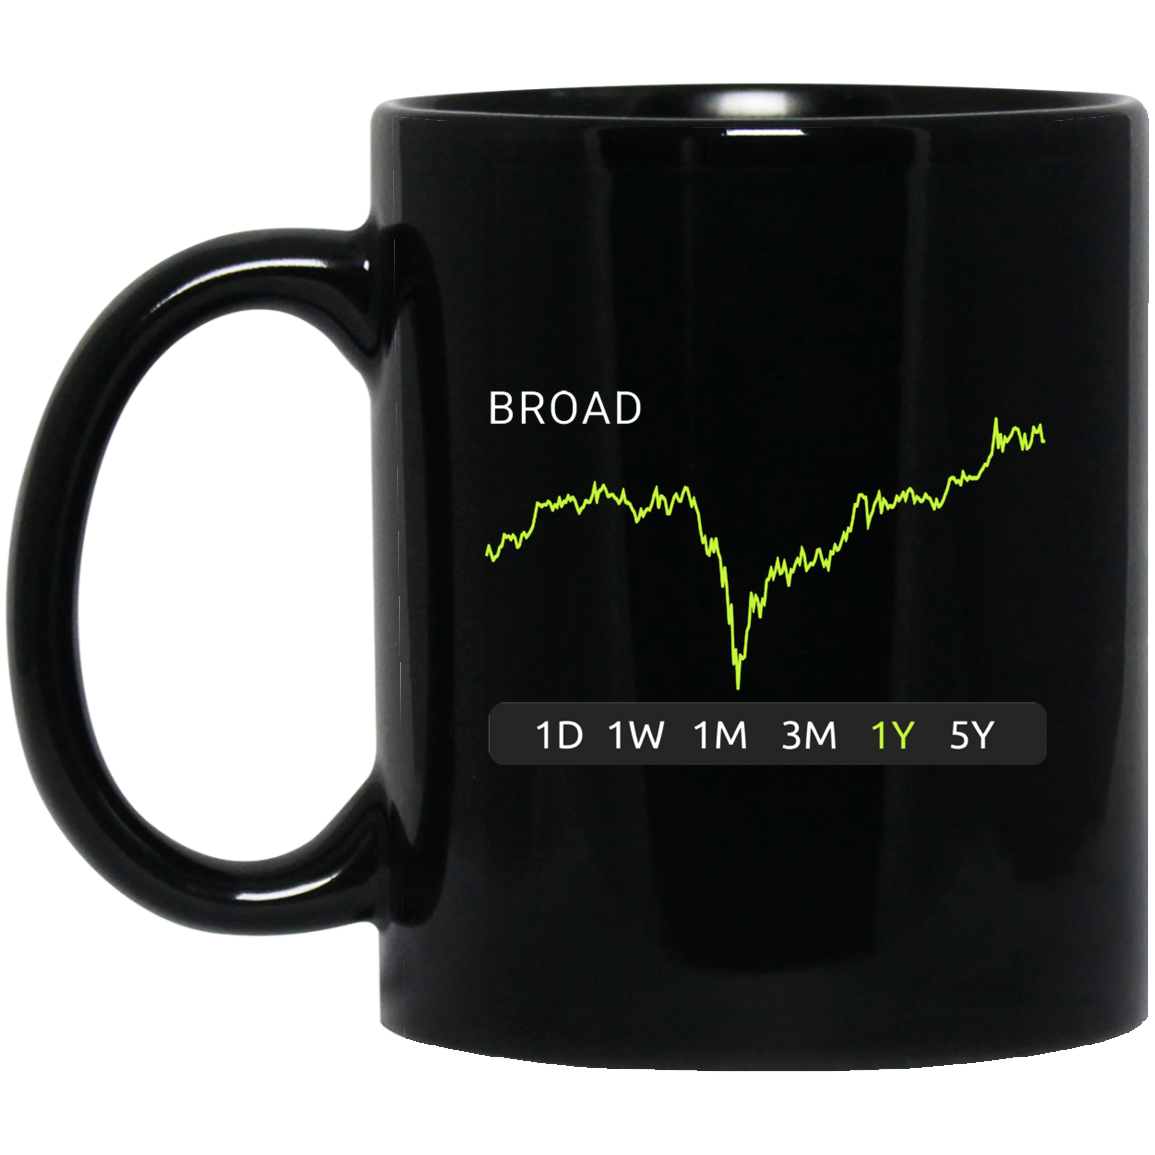 BROAD Stock 1y Mug